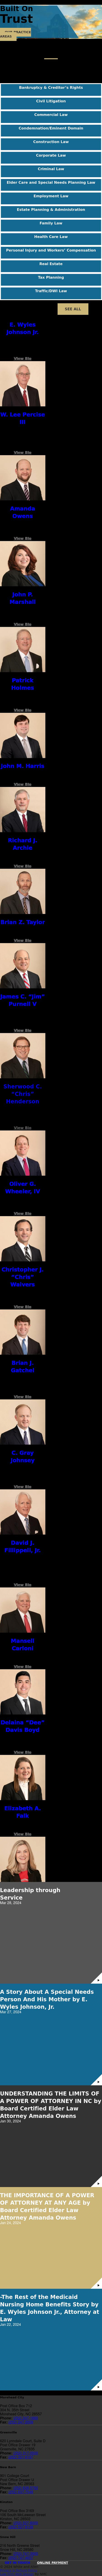 White & Allen, P.A. - New Bern NC Lawyers